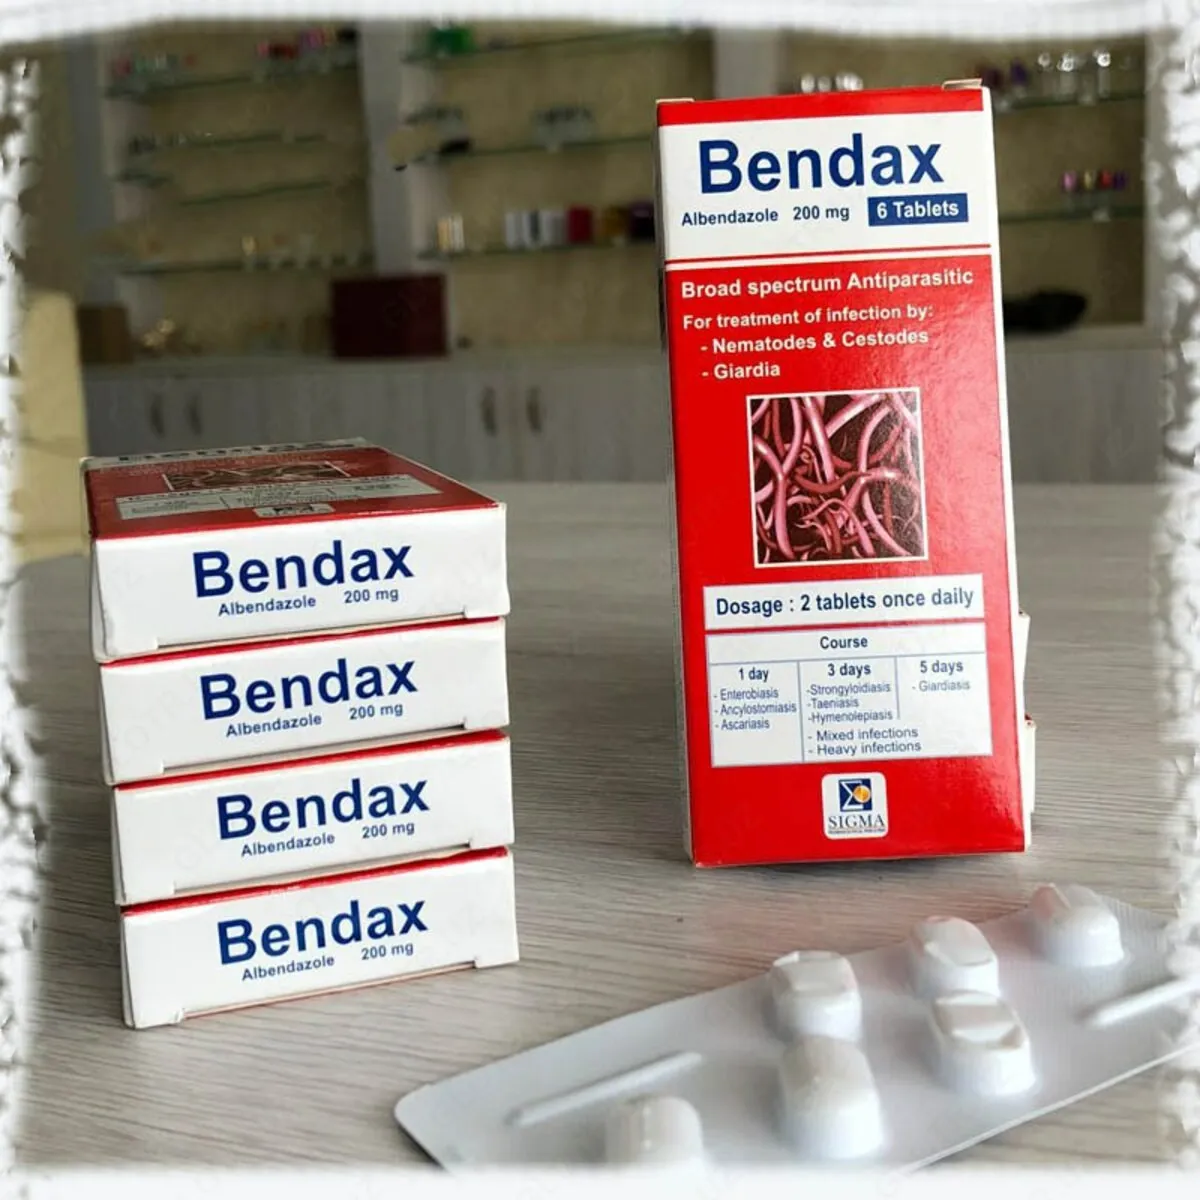 Antigelmintik preparat Bendax (6 tabletka)#2